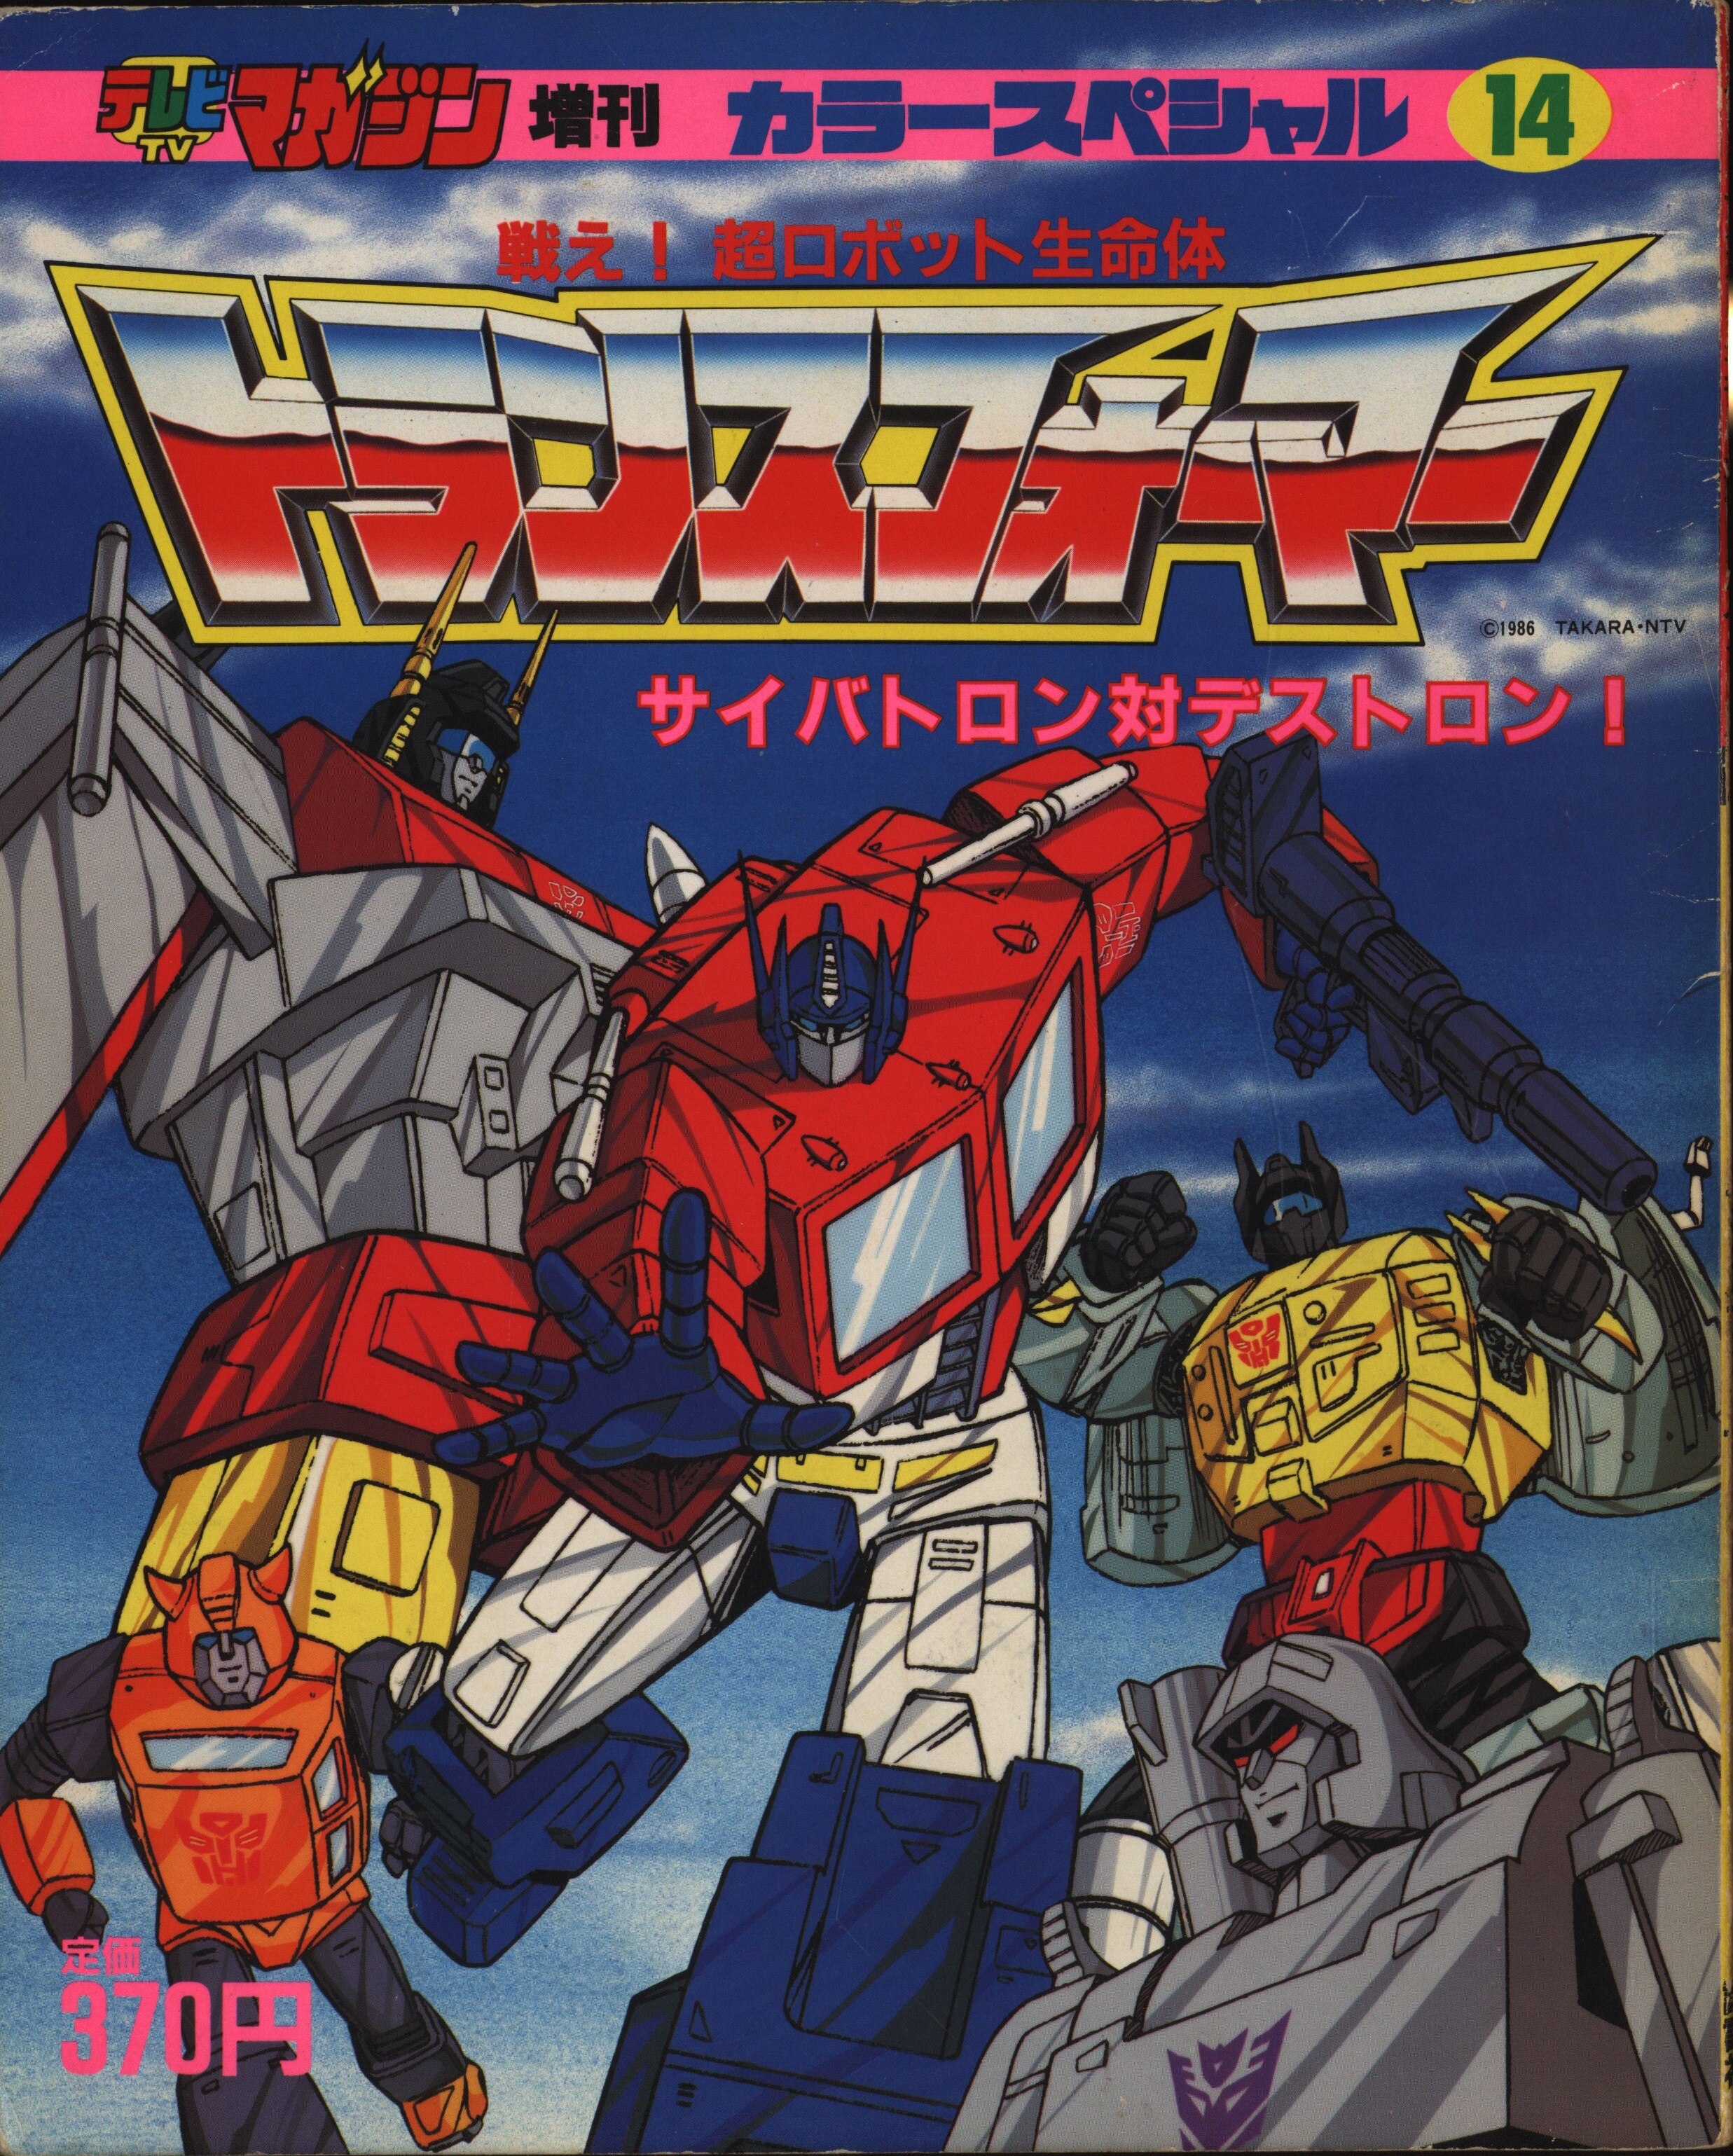 Kodansha TV Magazine Color Special Transformers / Cybertron vs Destron 14 |  Mandarake Online Shop